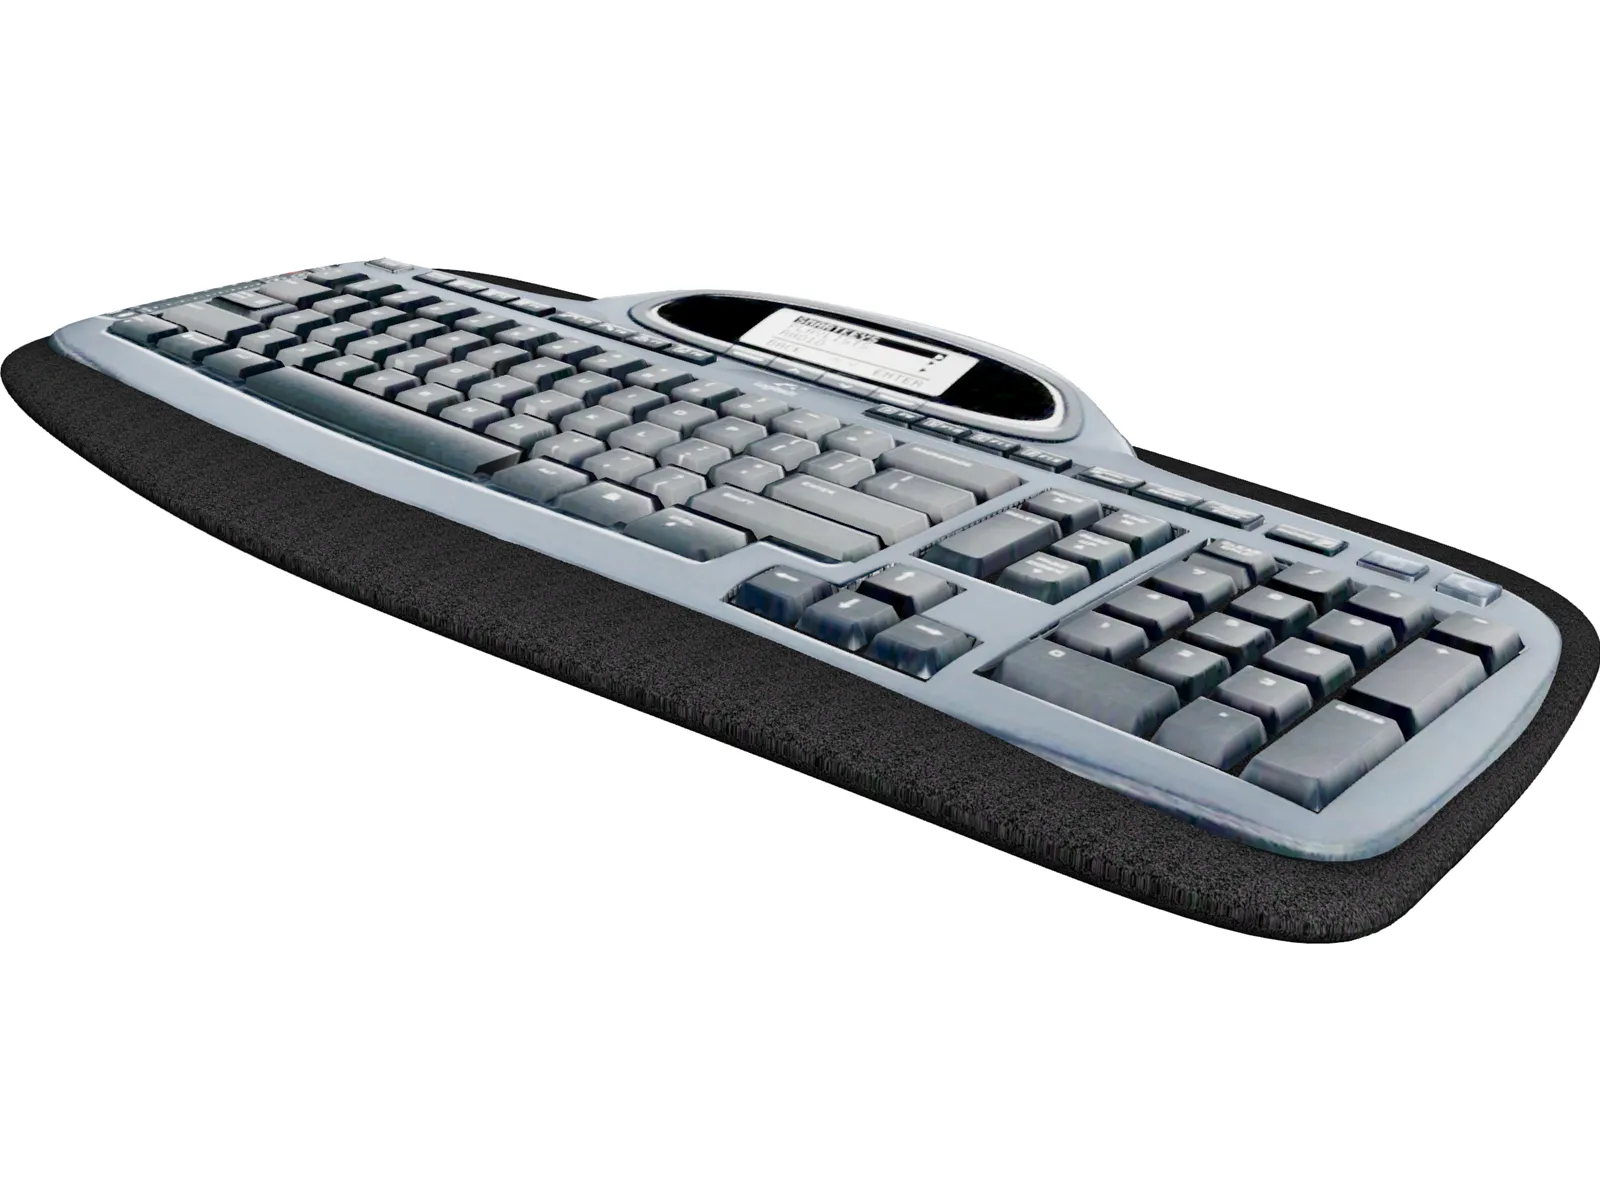 Logitech MX5000 Keyboard 3D Model - 3D CAD